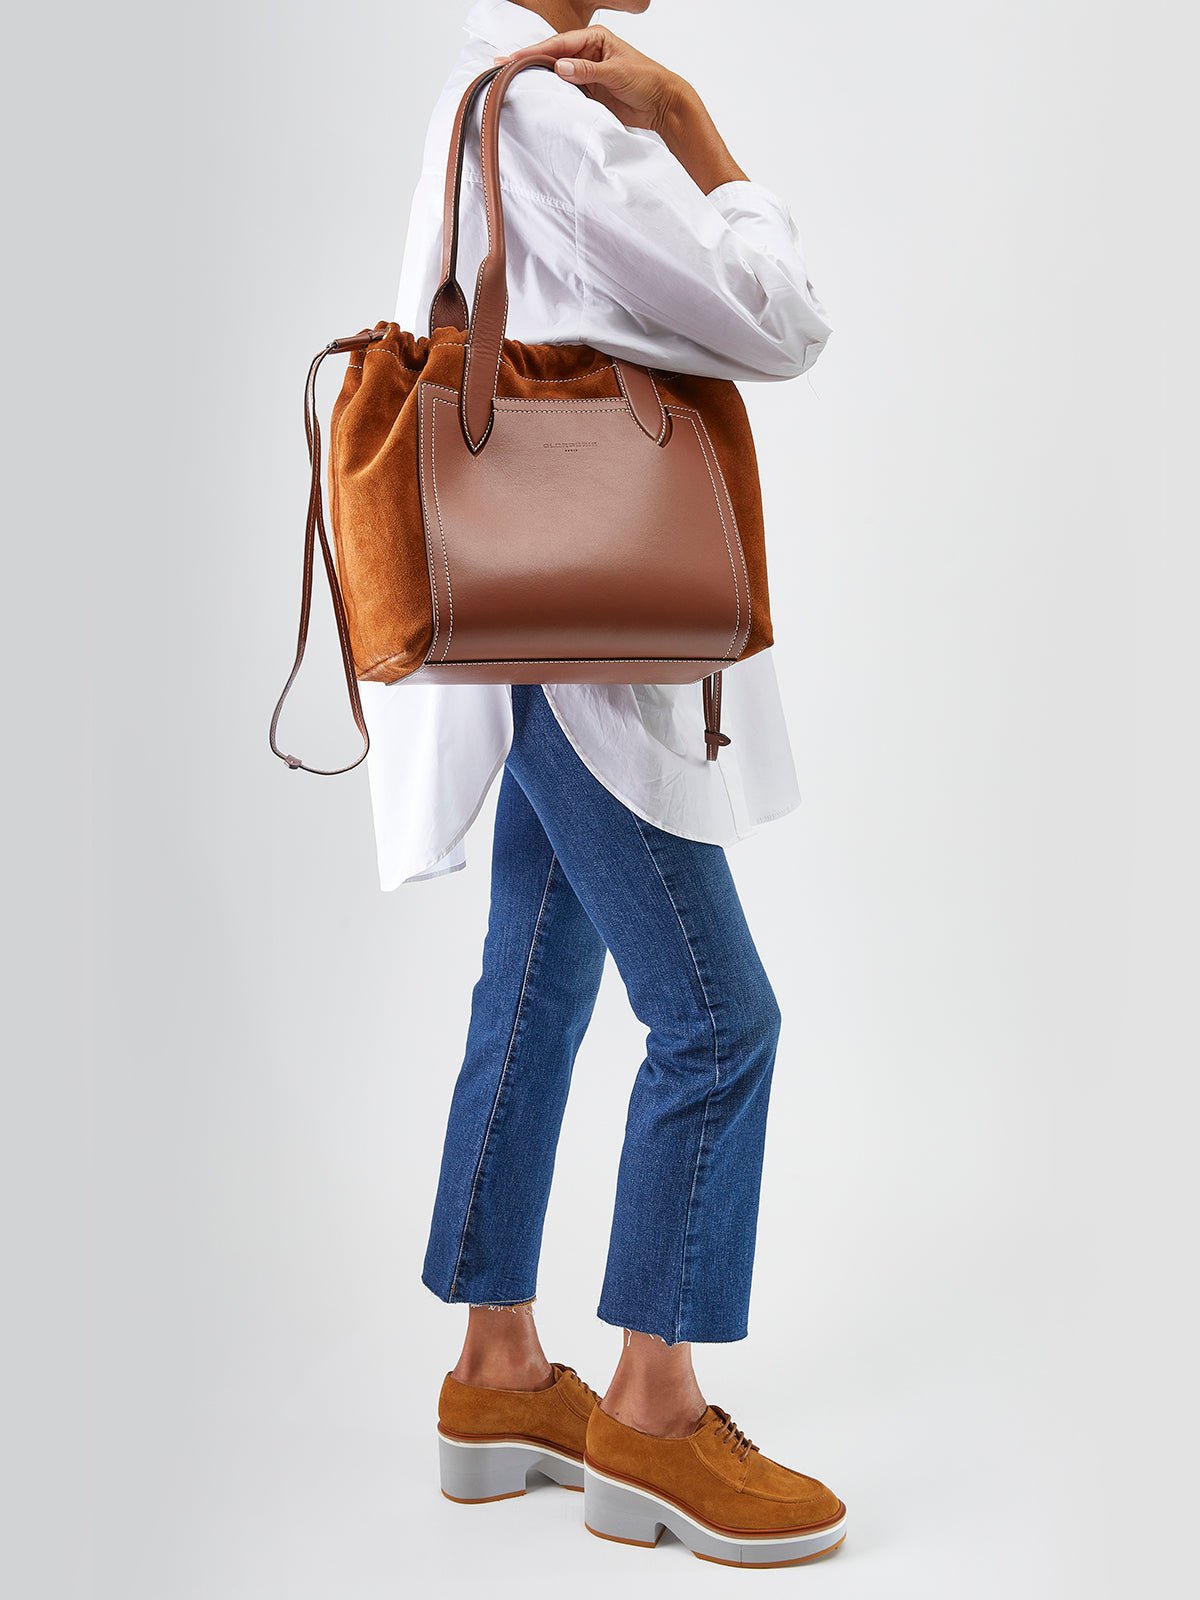 Makayla Bag (FREE, 2 sizes + video) - Sew Modern Bags